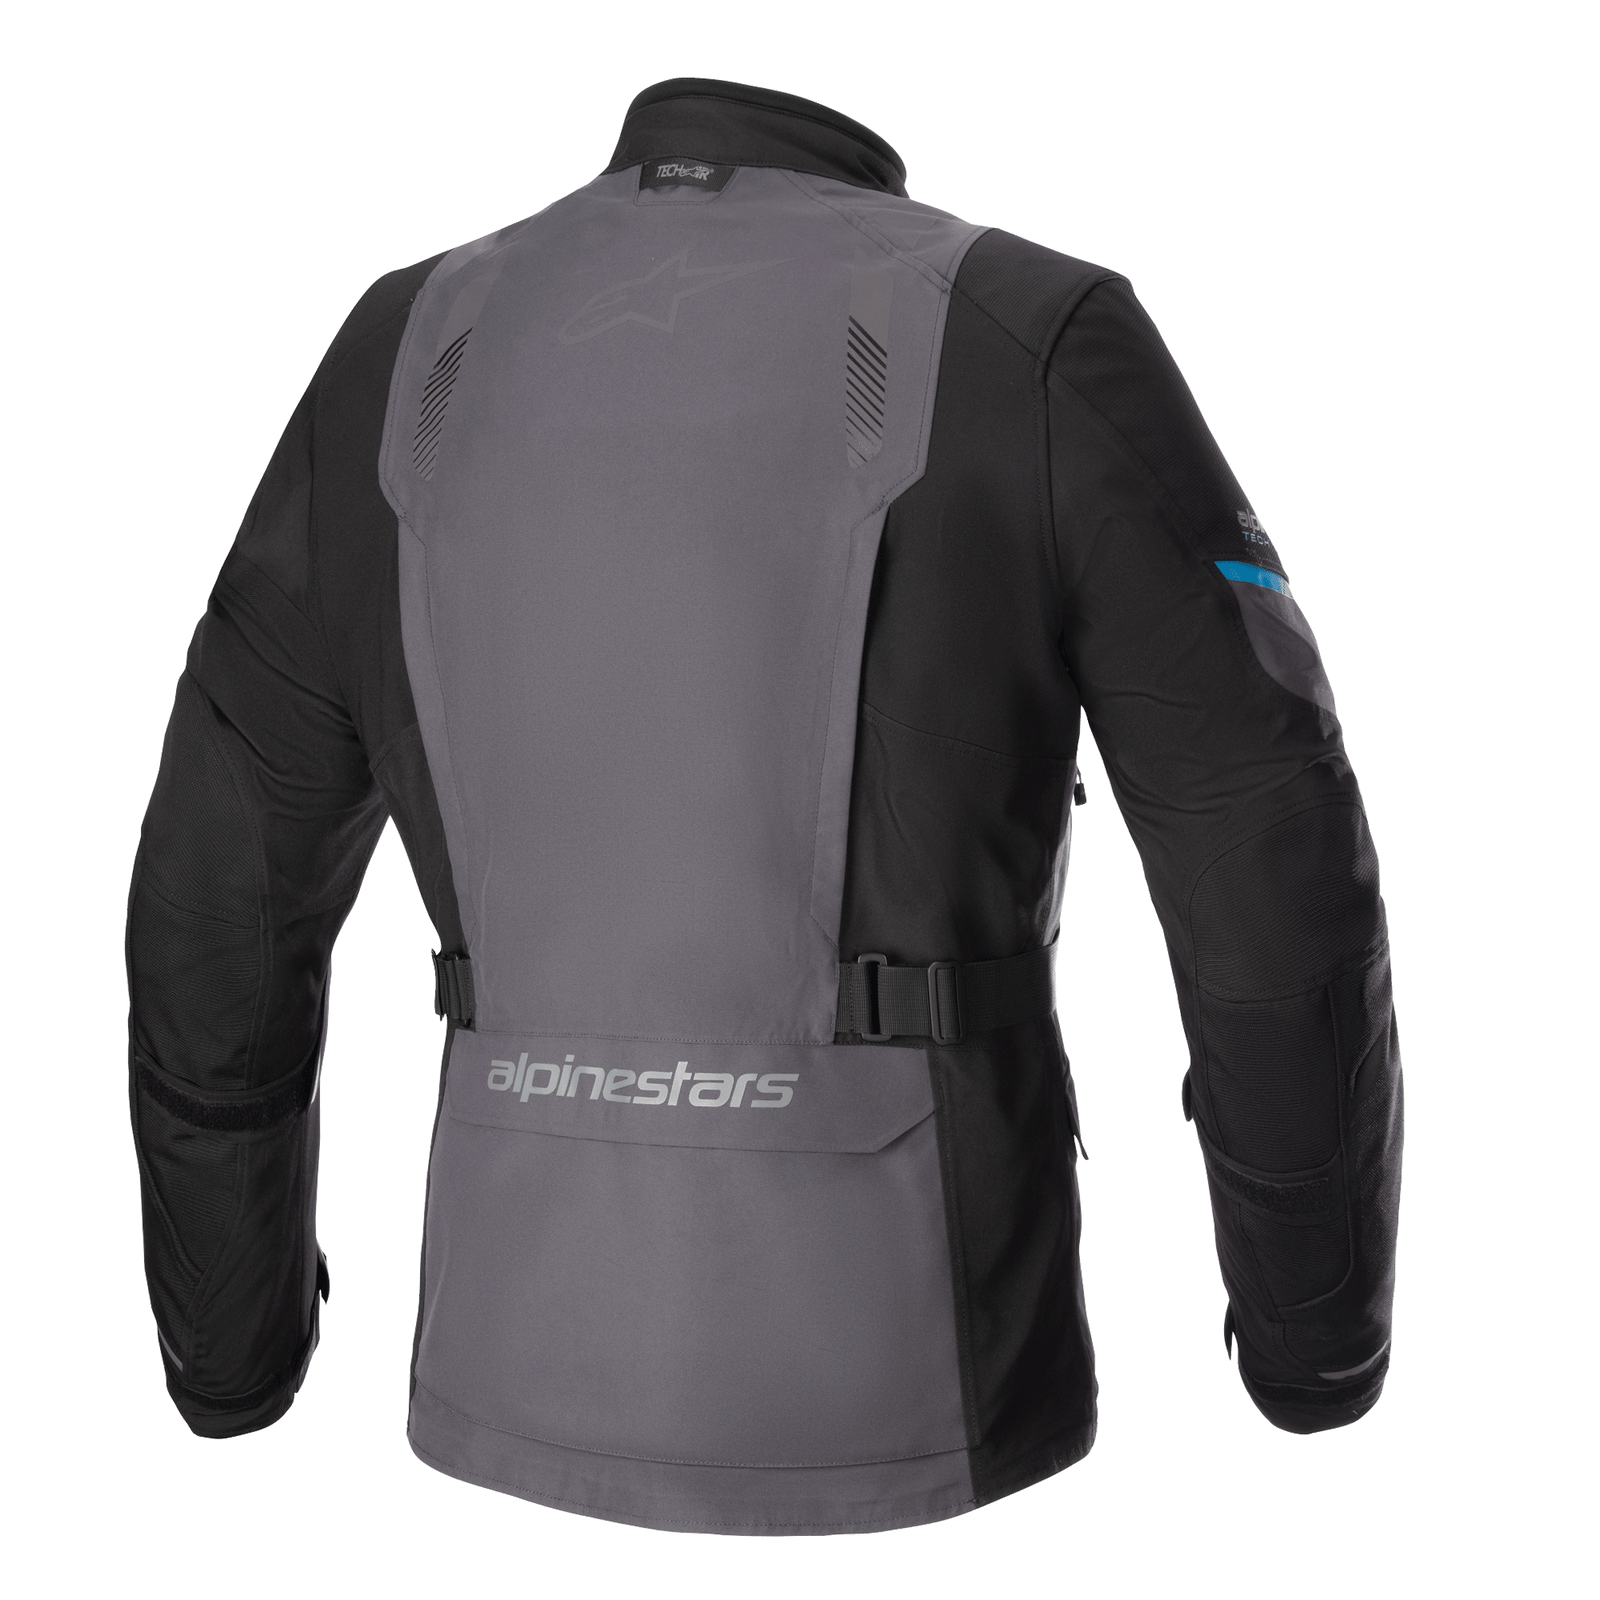 Monteira Drystar® XF Jacket